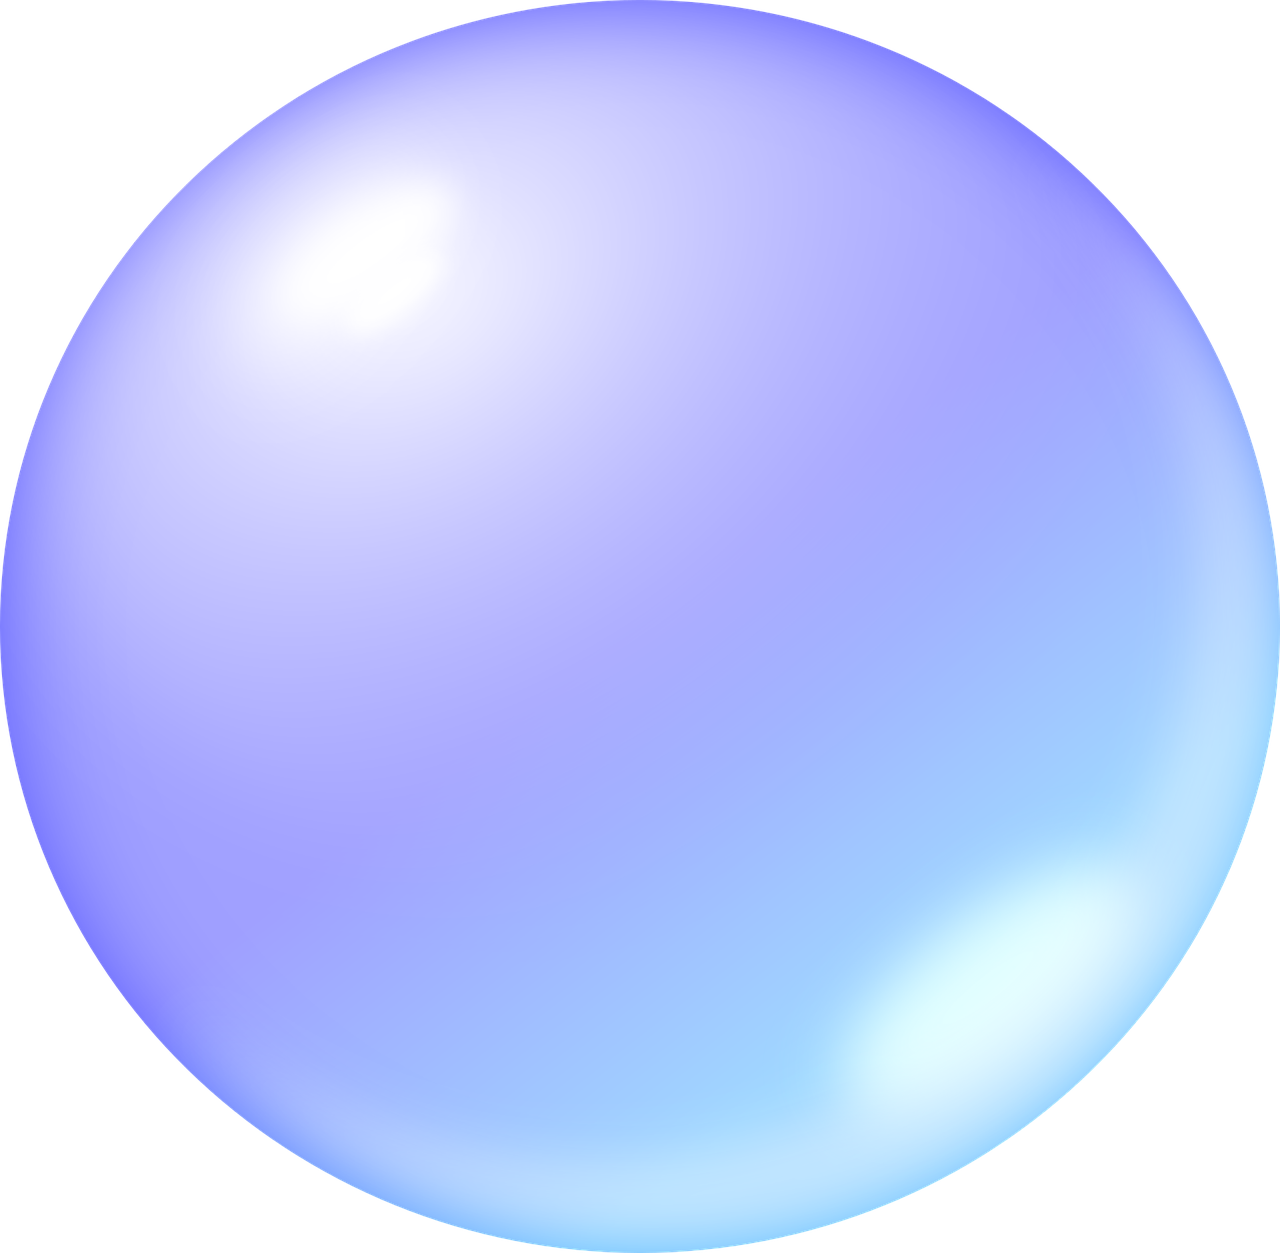 Bubble,soap bubble,ball,about,blue - free image from needpix.com